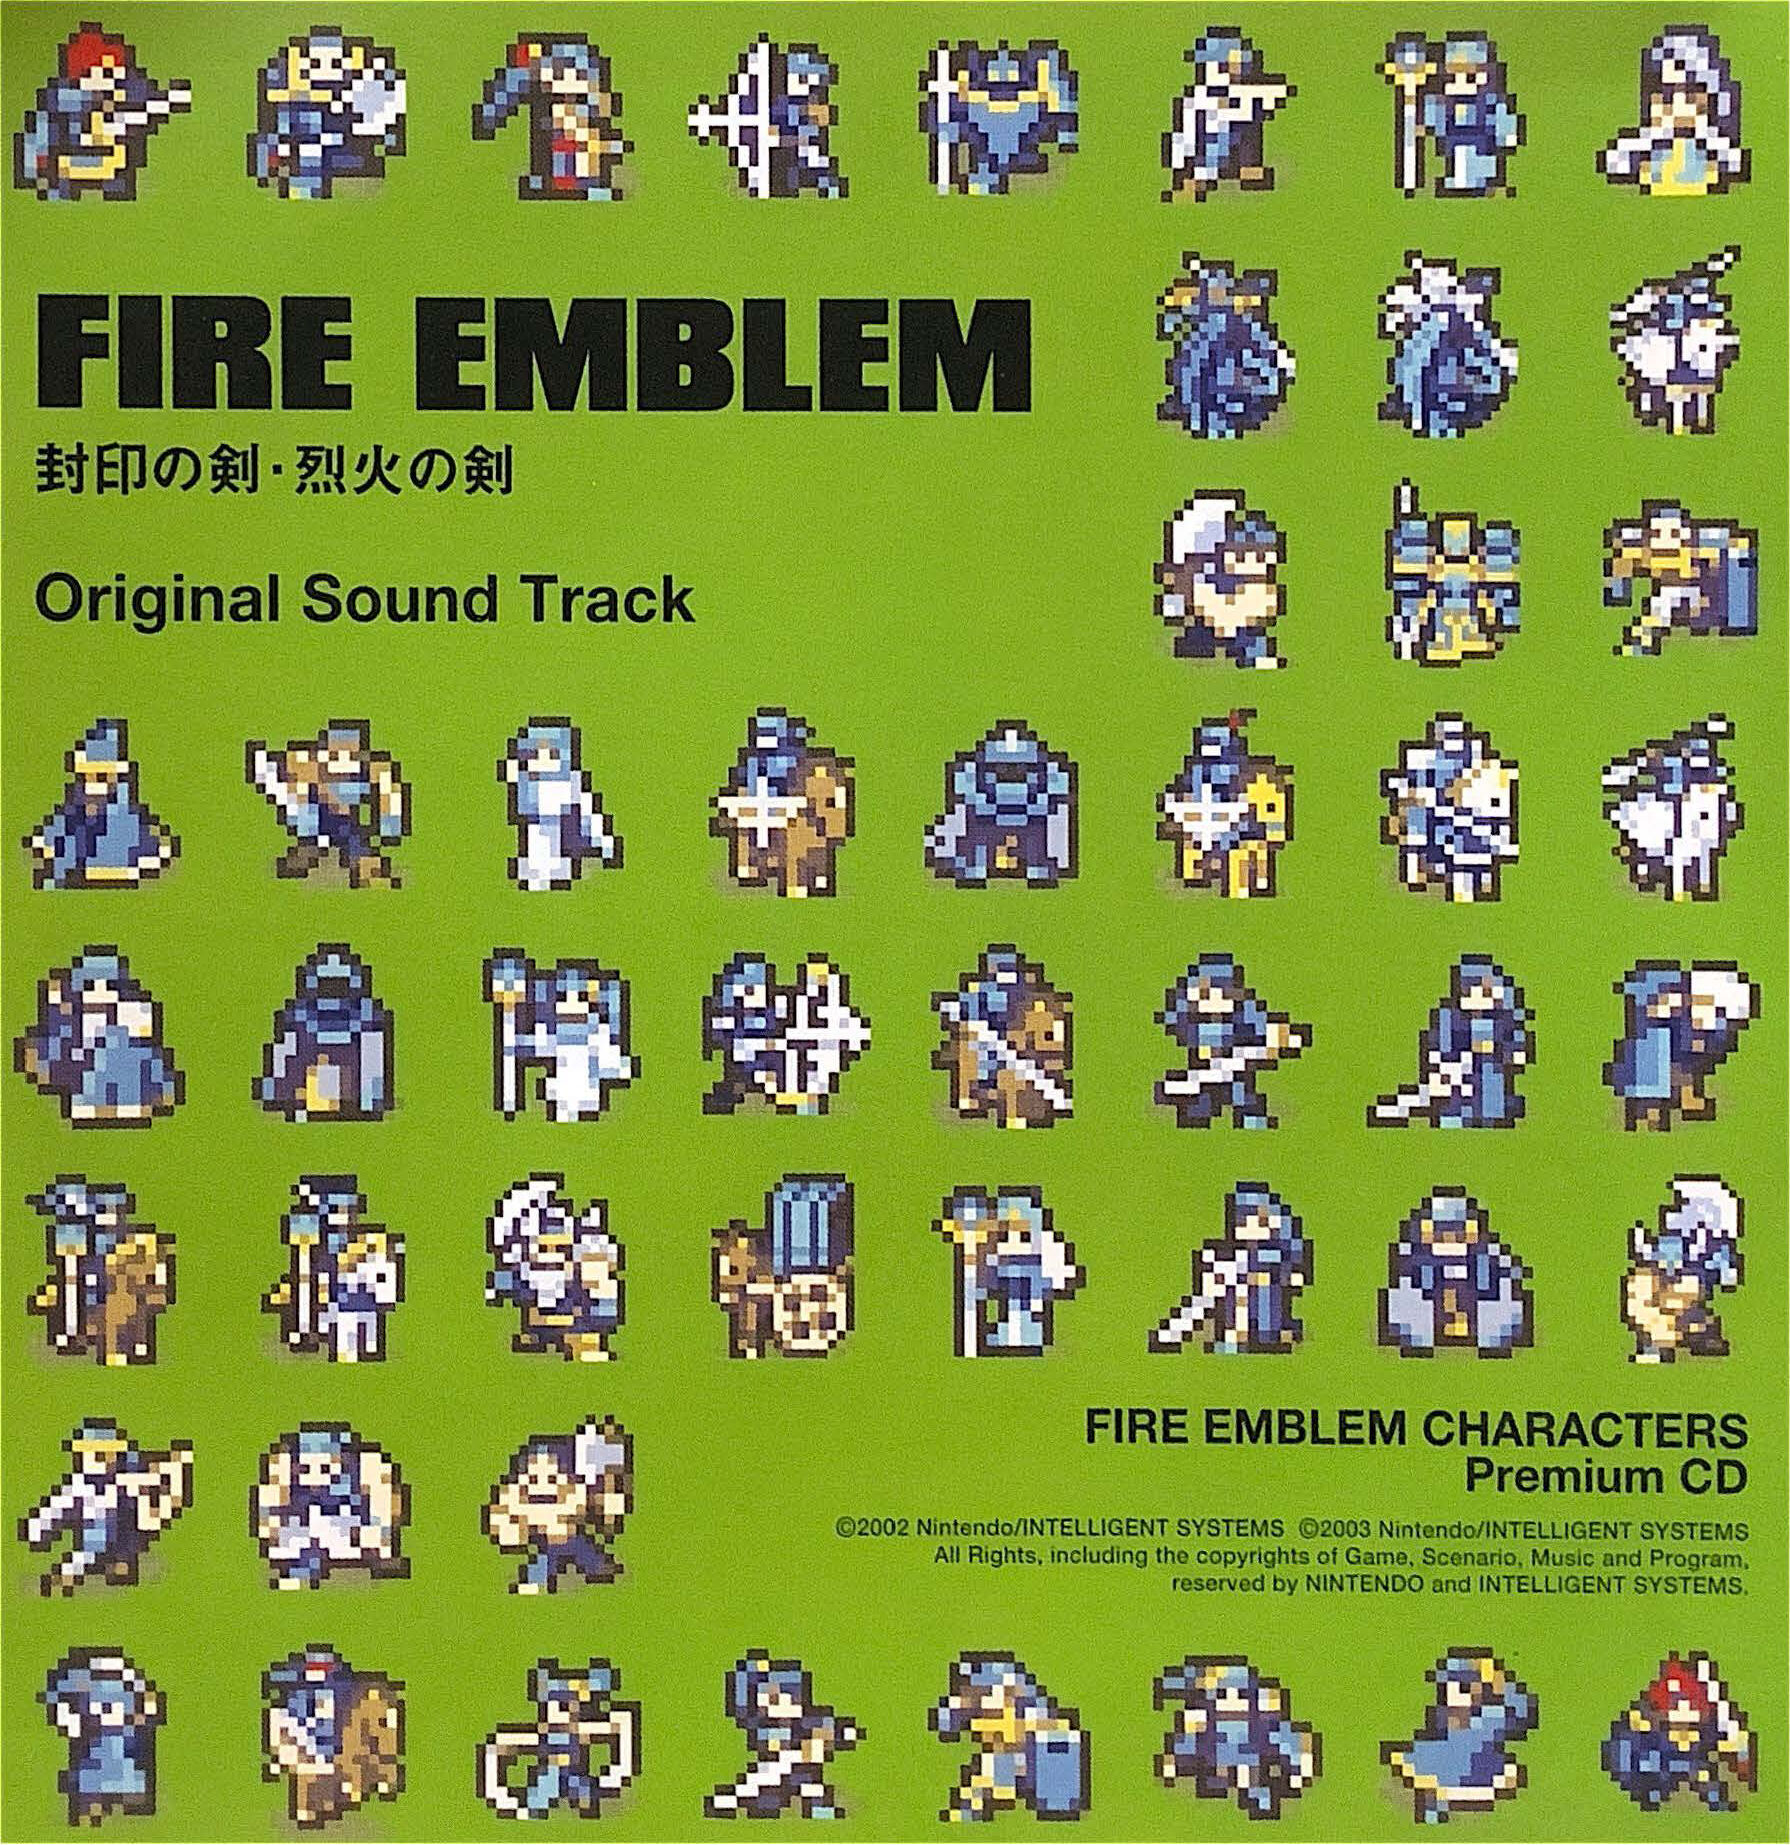 Fire Emblem 6 & 7 Premium Soundtrack | Fire Emblem Wiki | Fandom